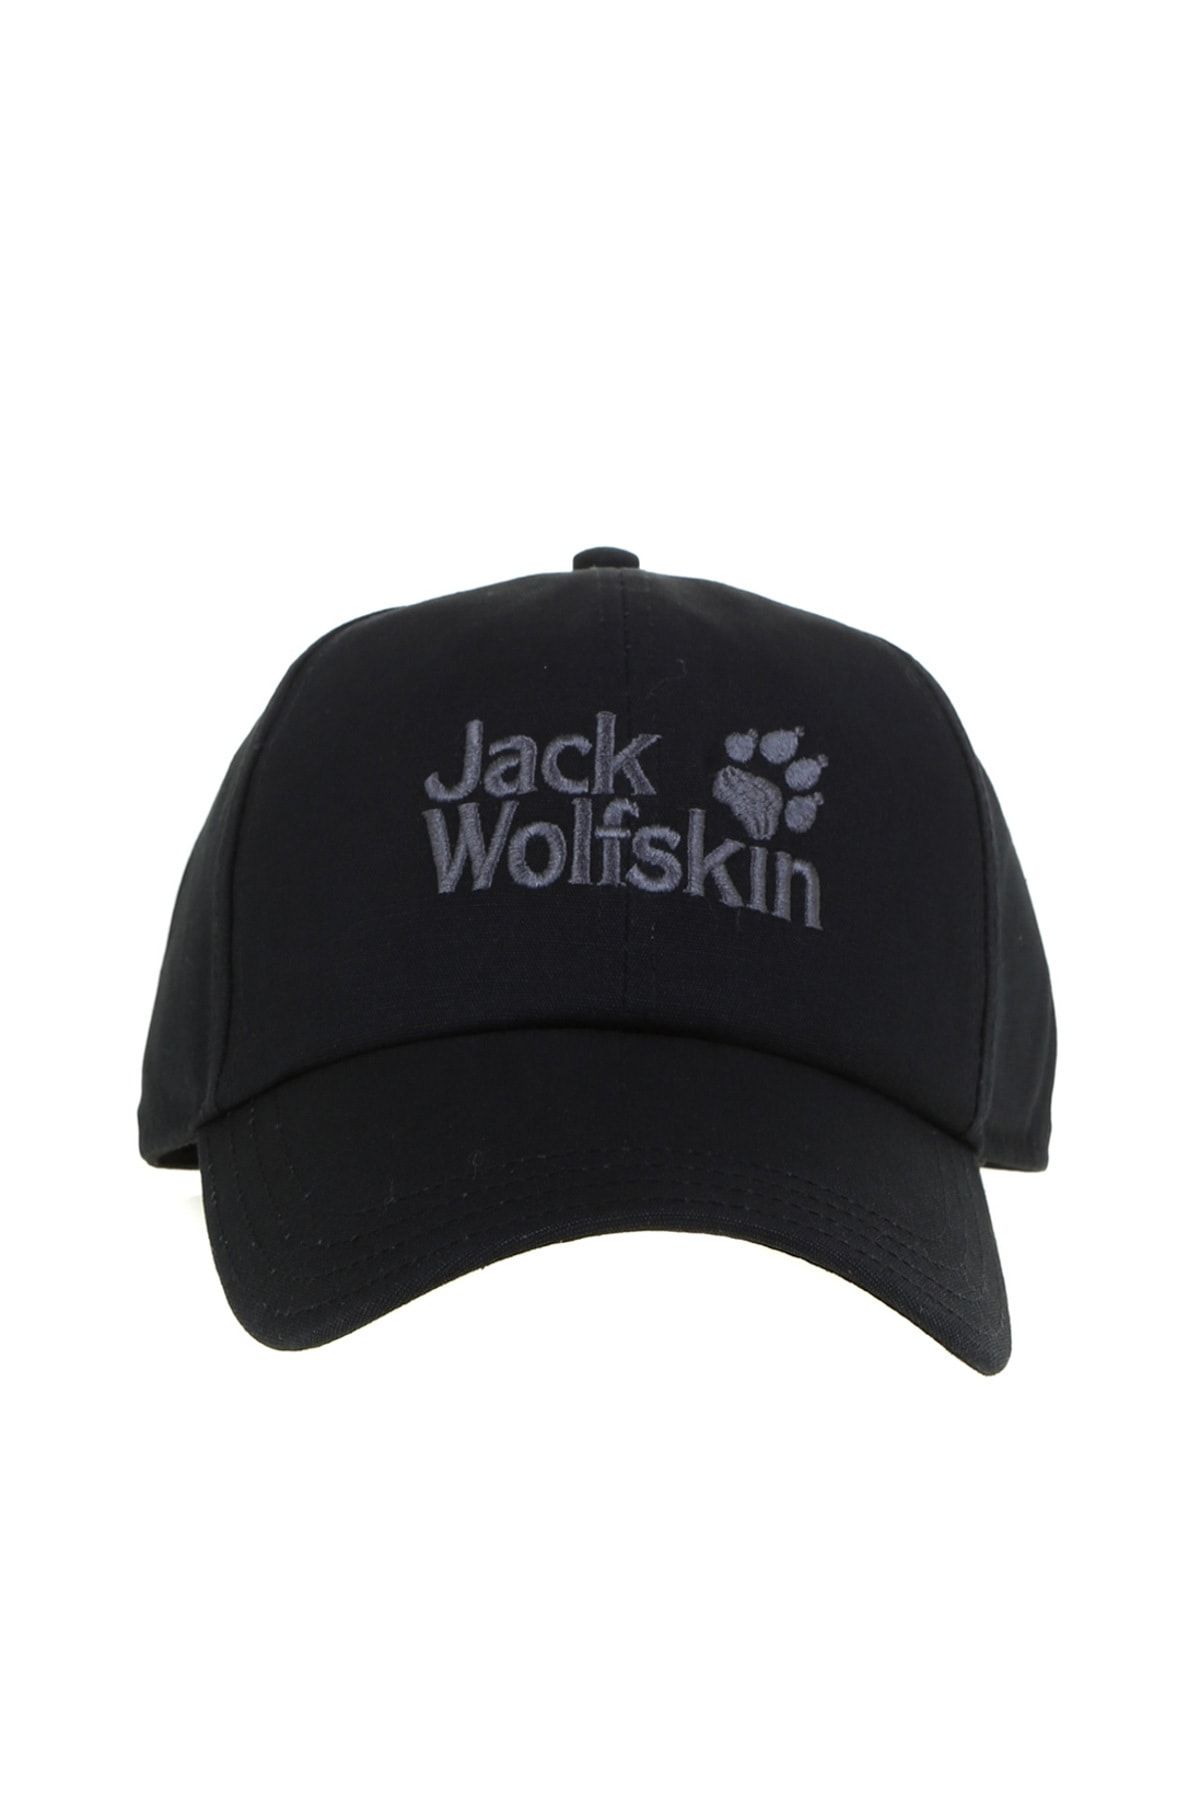 Jack Wolfskin Unisex Baseball Cap - Sapka 1900671